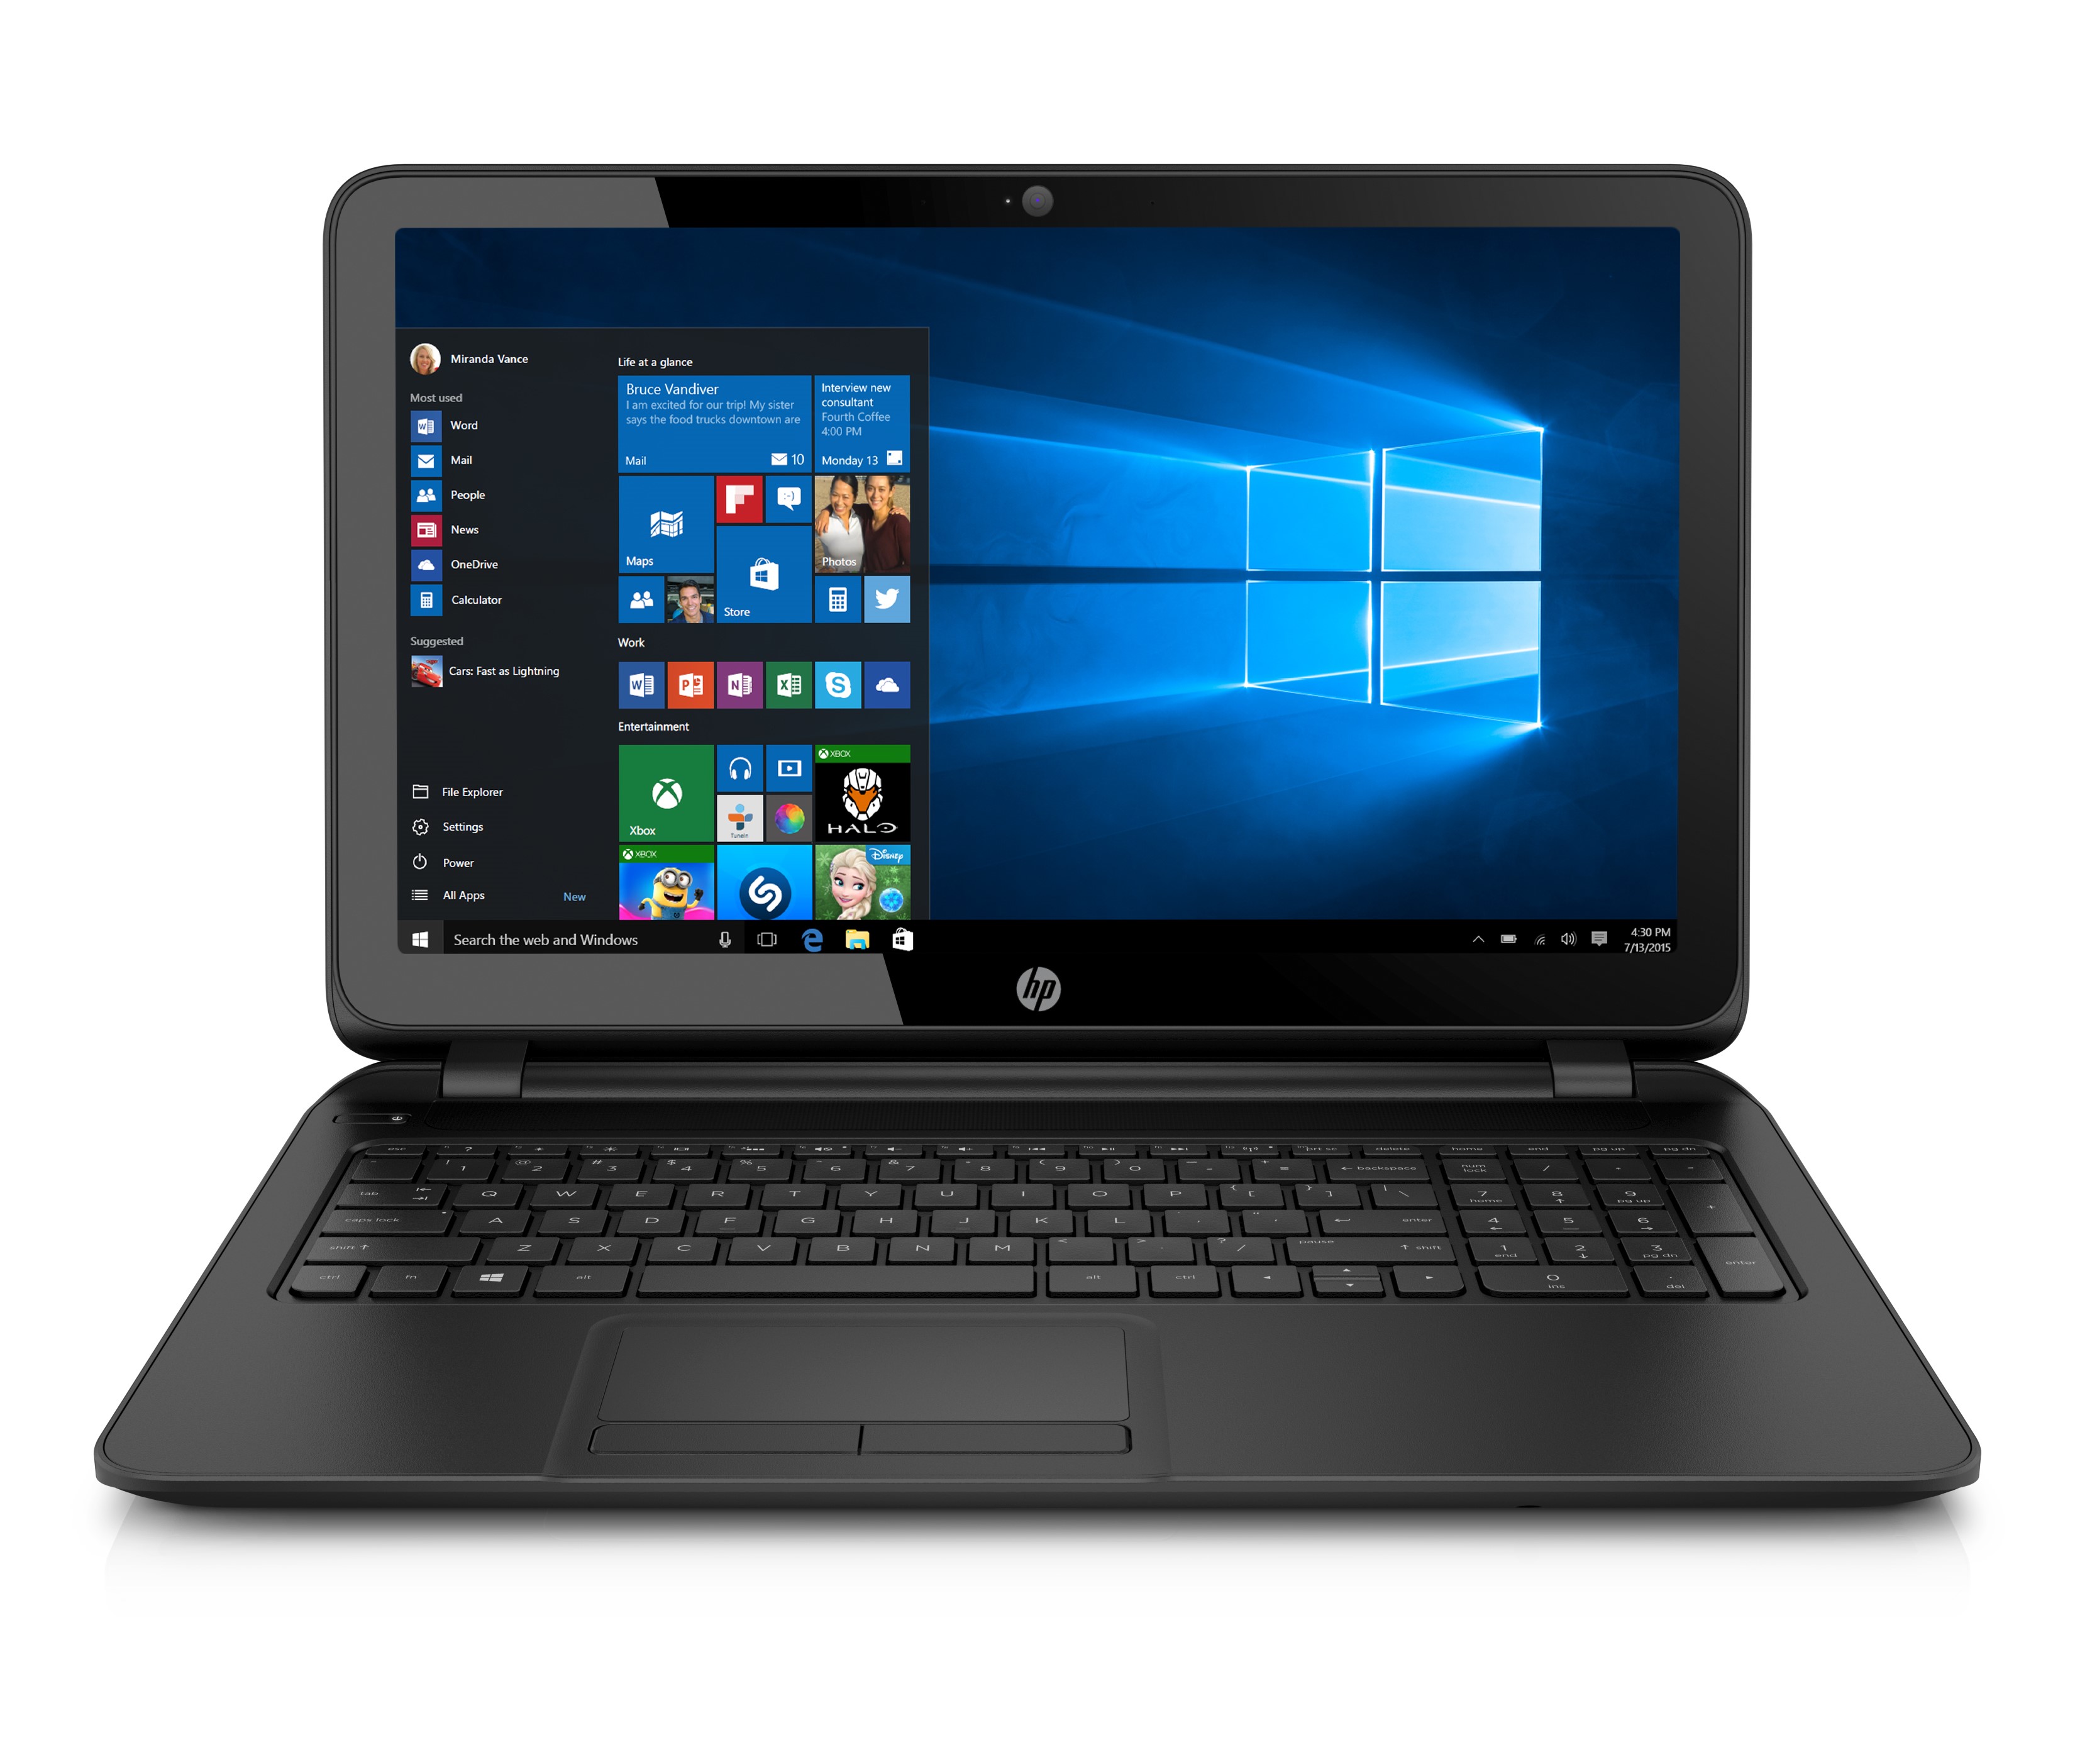 HP 15-f246wm 15.6" Laptop", Intel Celeron N2840, Intel HD Graphics, 500GB HDD, 4GB RAM, 15-F246WM Black - image 1 of 4